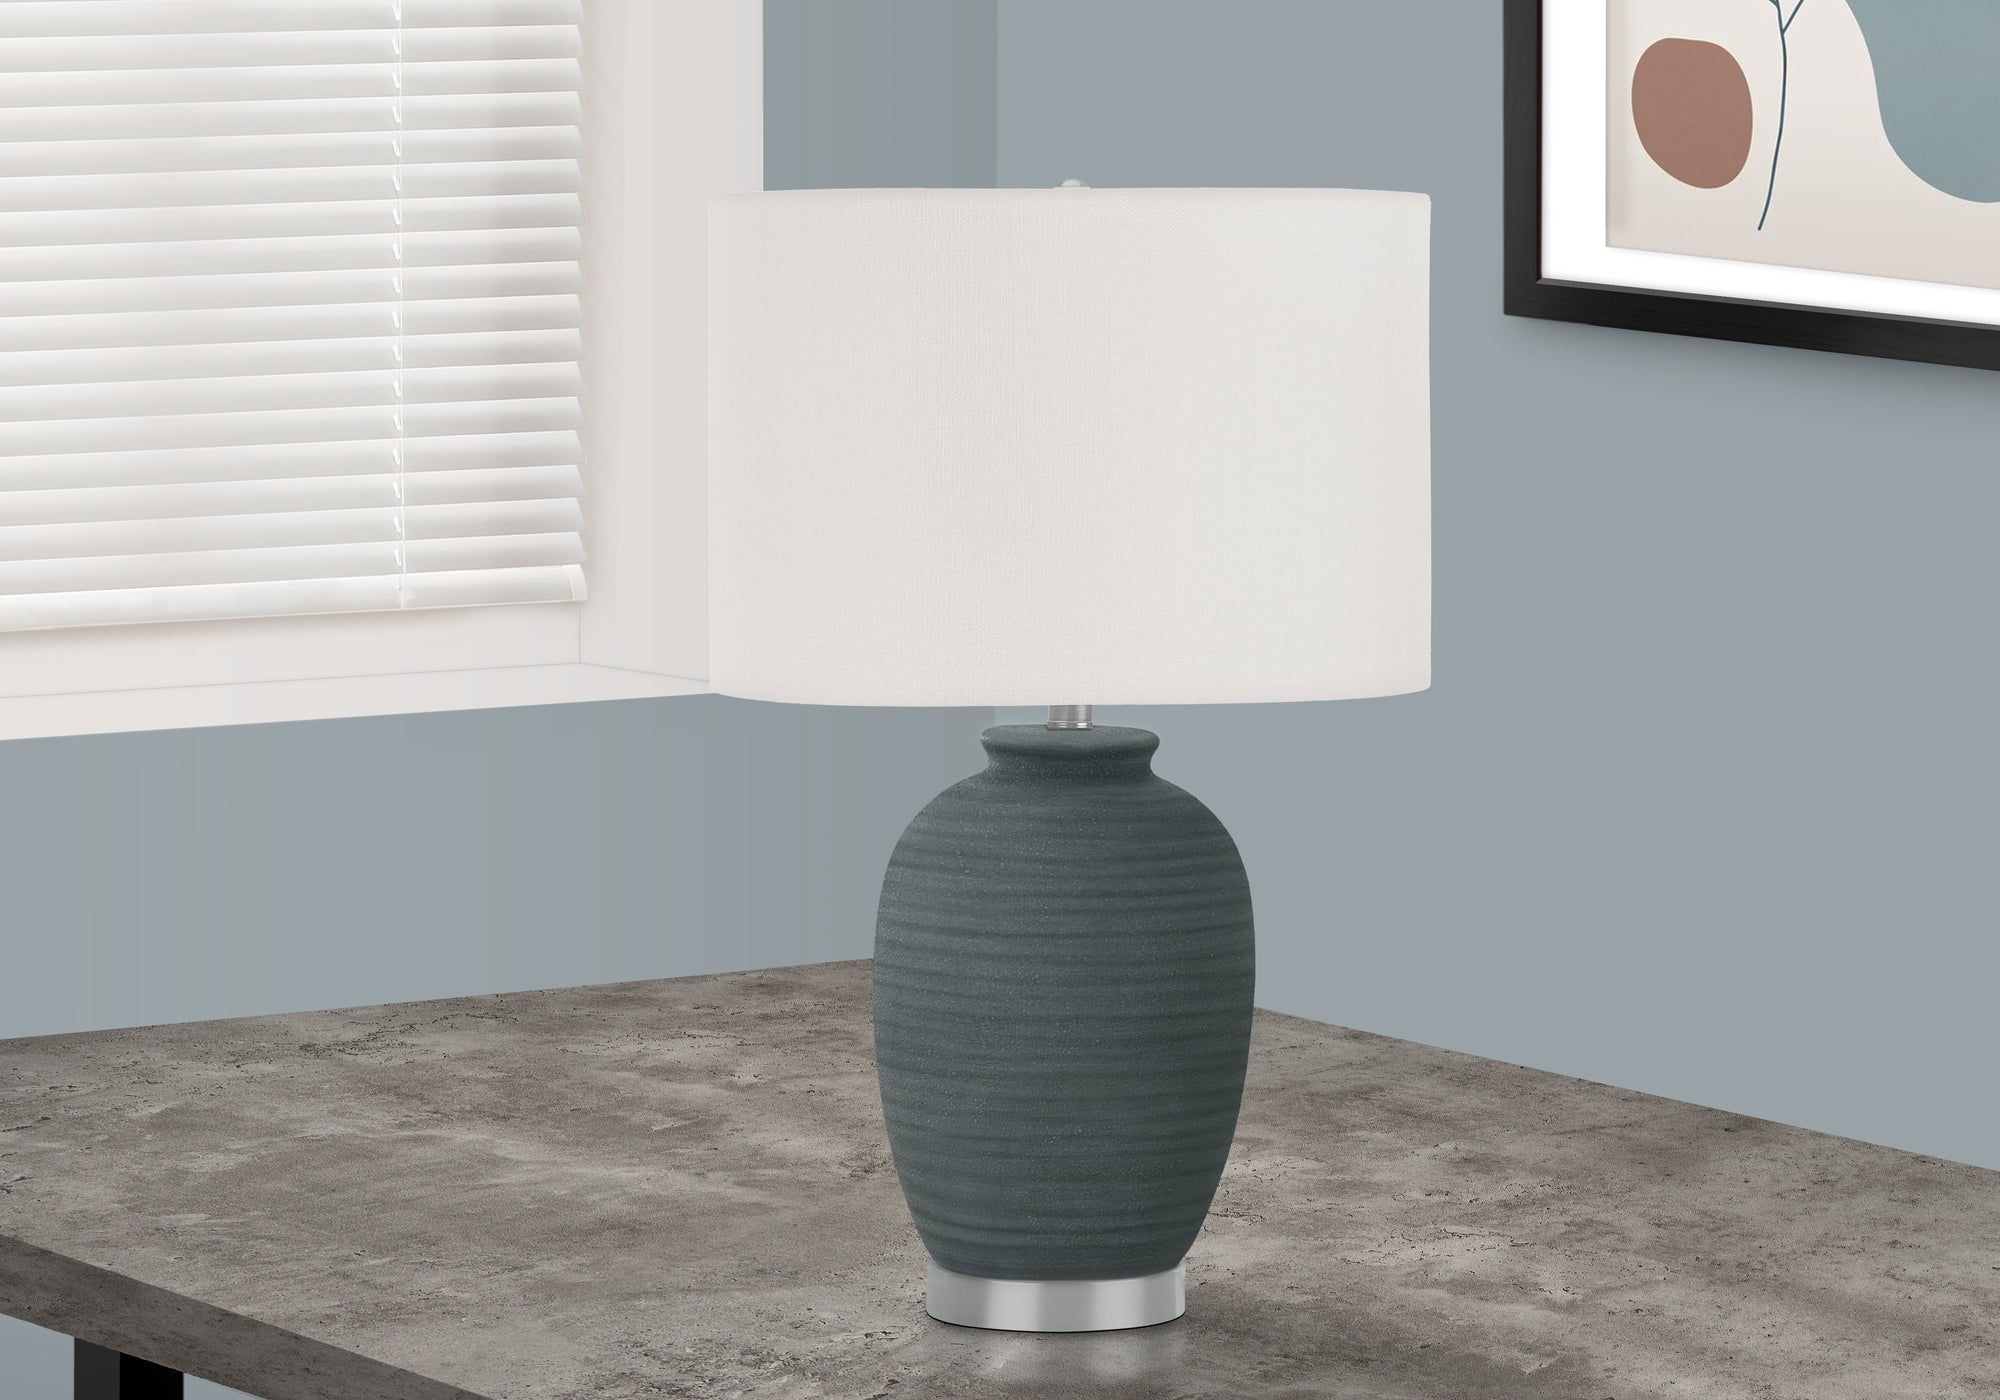 MN-959622    Lighting, 24"H, Table Lamp, Blue Ceramic, Ivory / Cream Shade, Contemporary